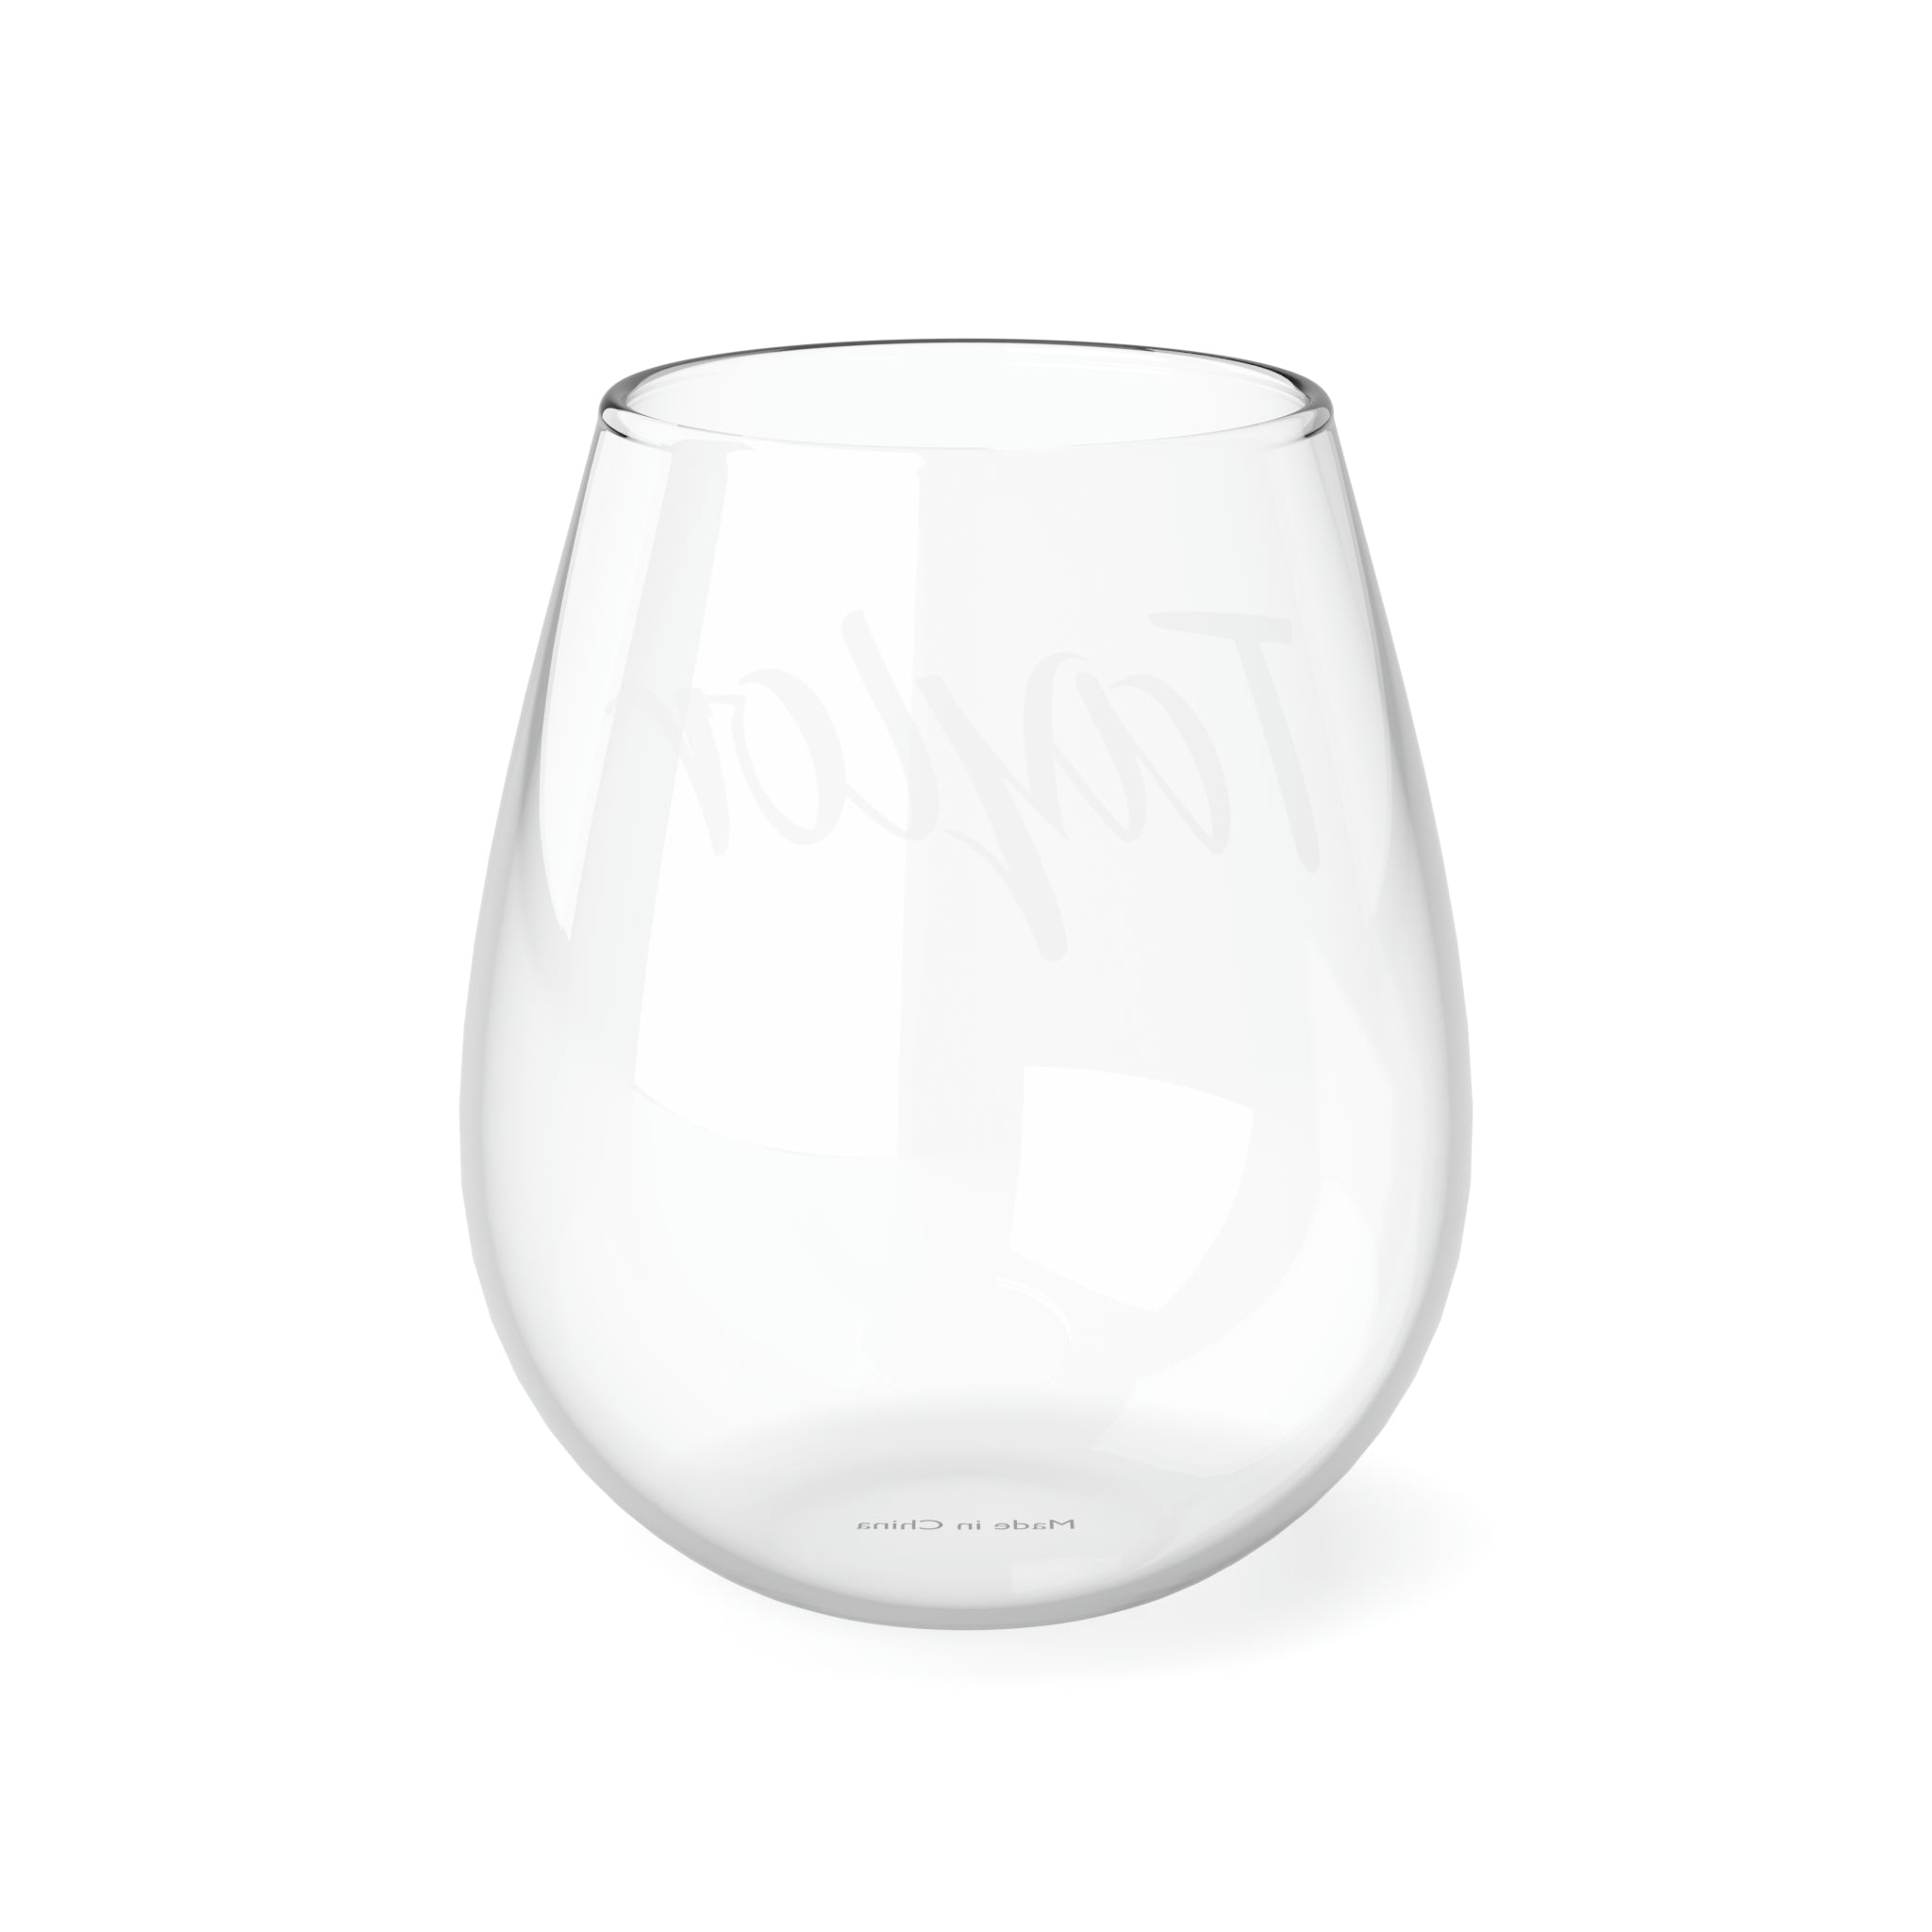 Stemless Wine Glass, 11.75oz - Tipsy - Personalized